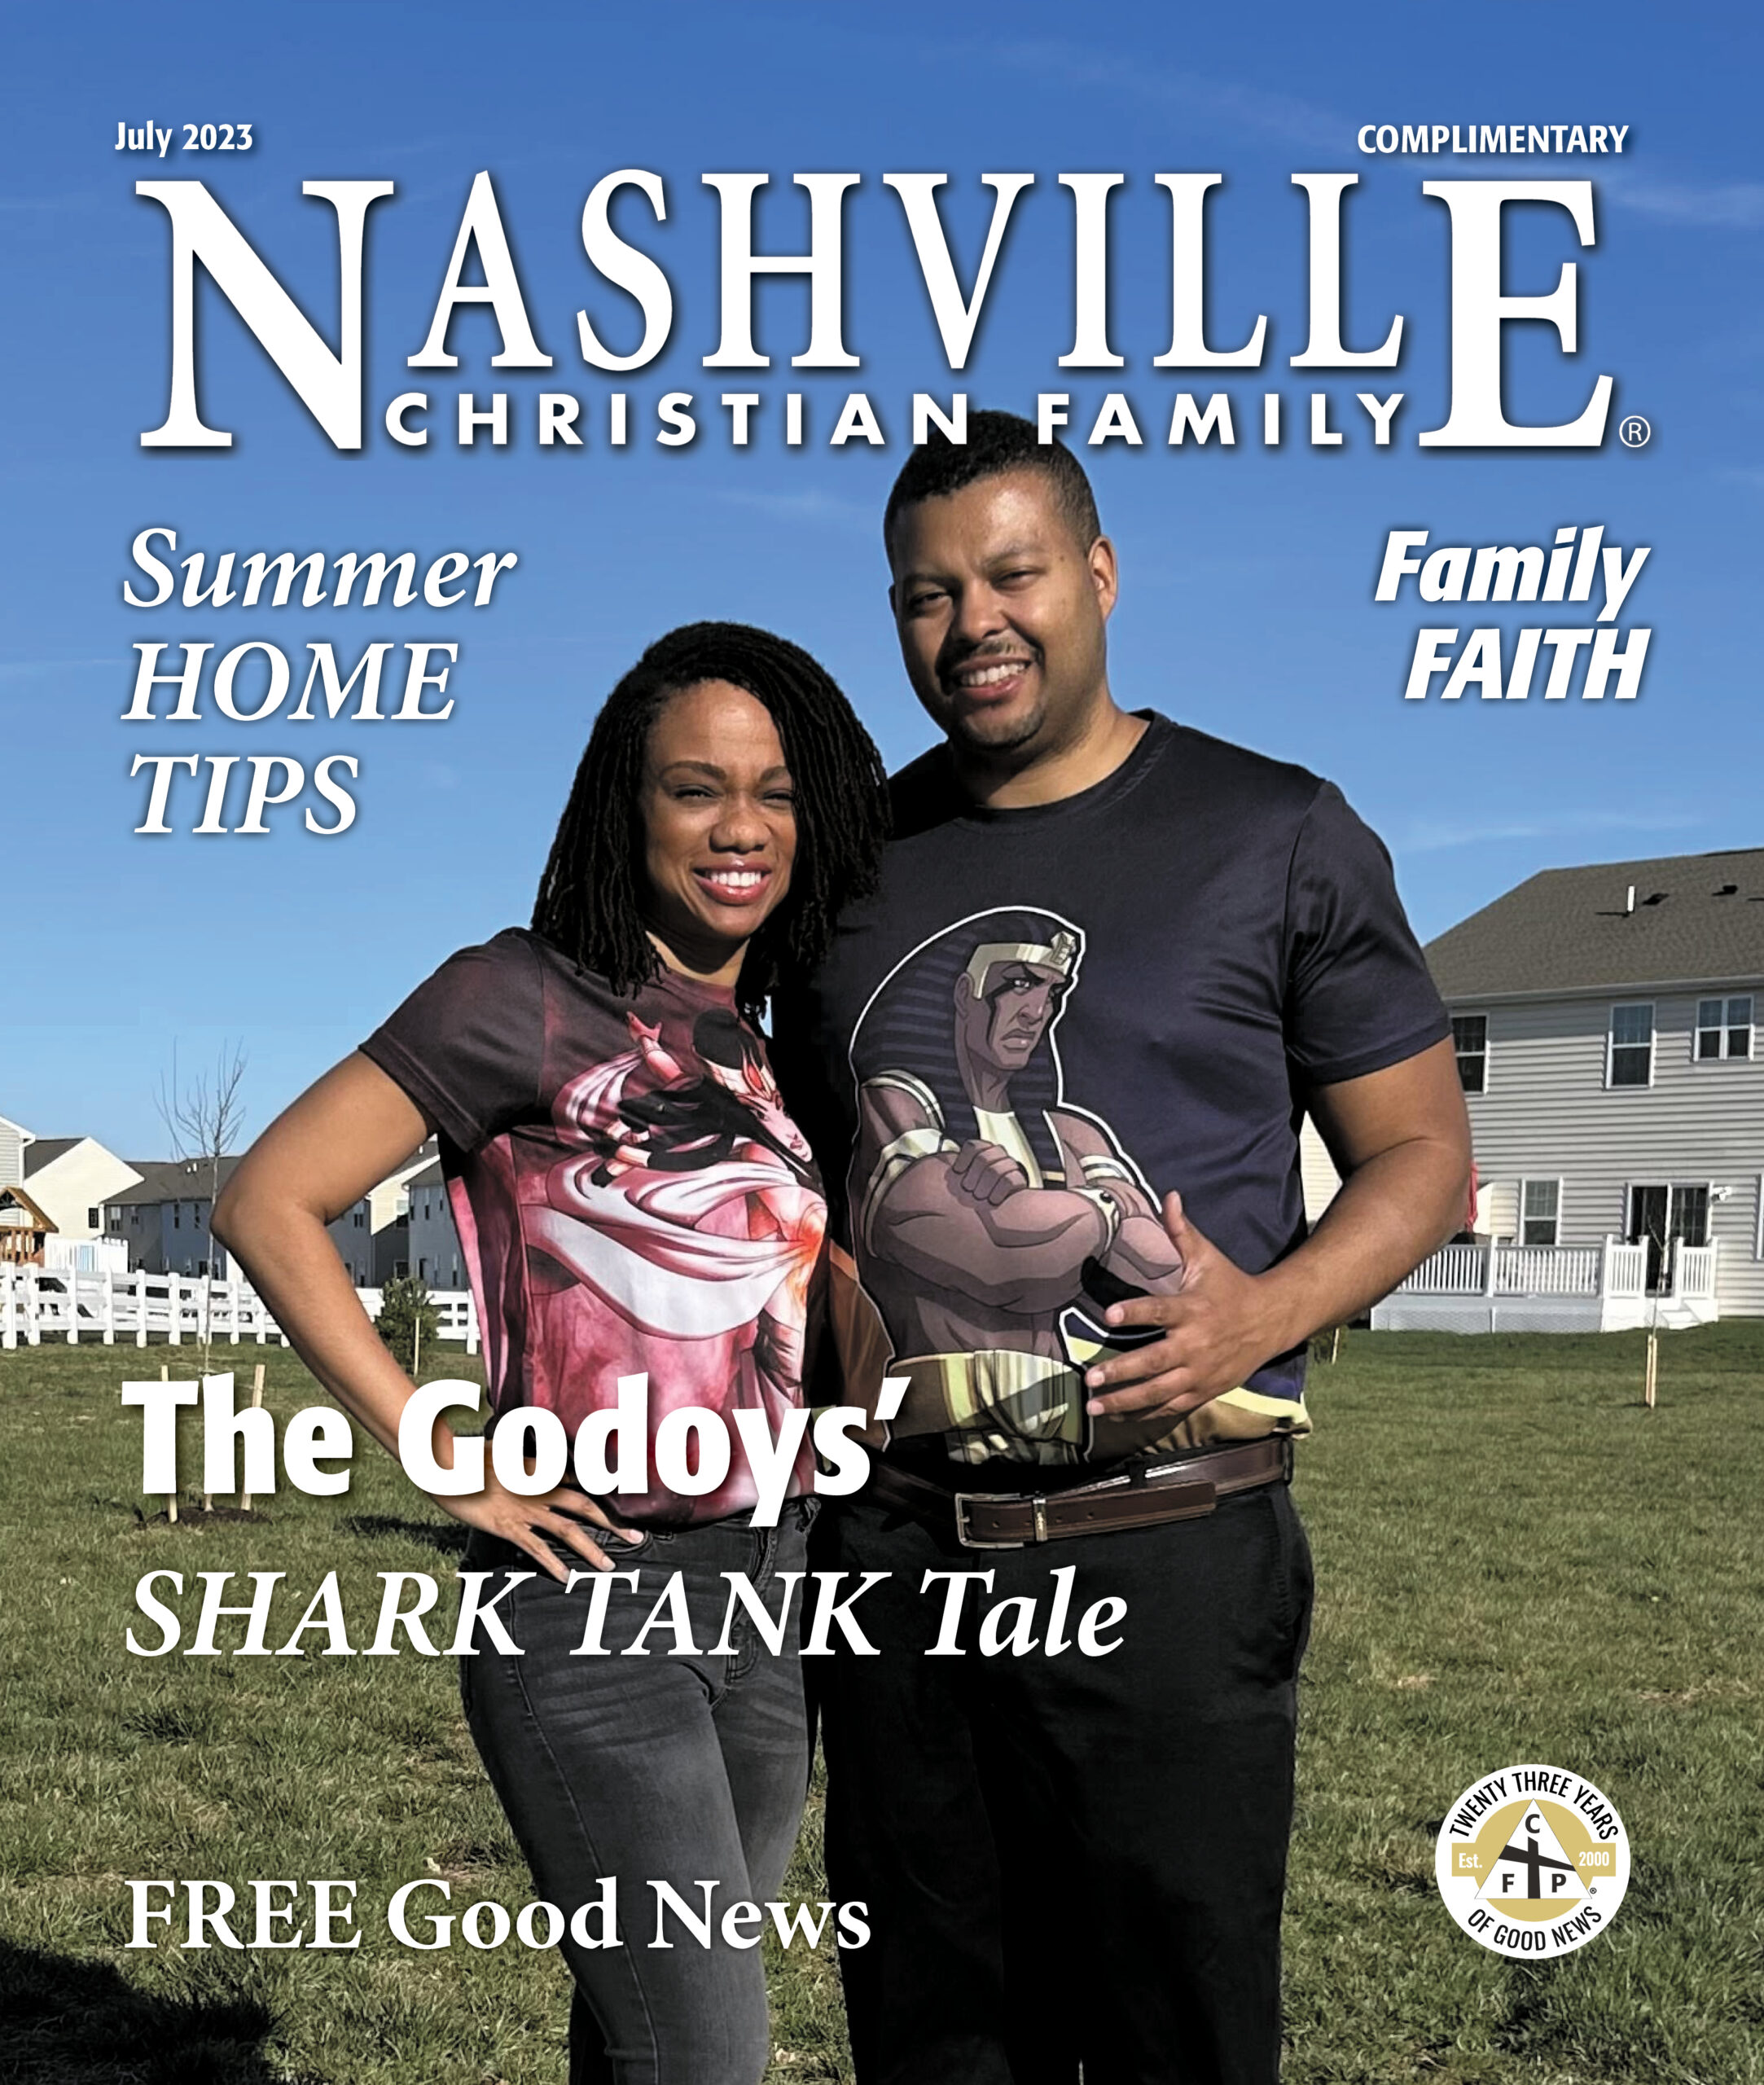 Cover | Nashville Christian Family Magazine July 2023 issue - free Christian magazine cover